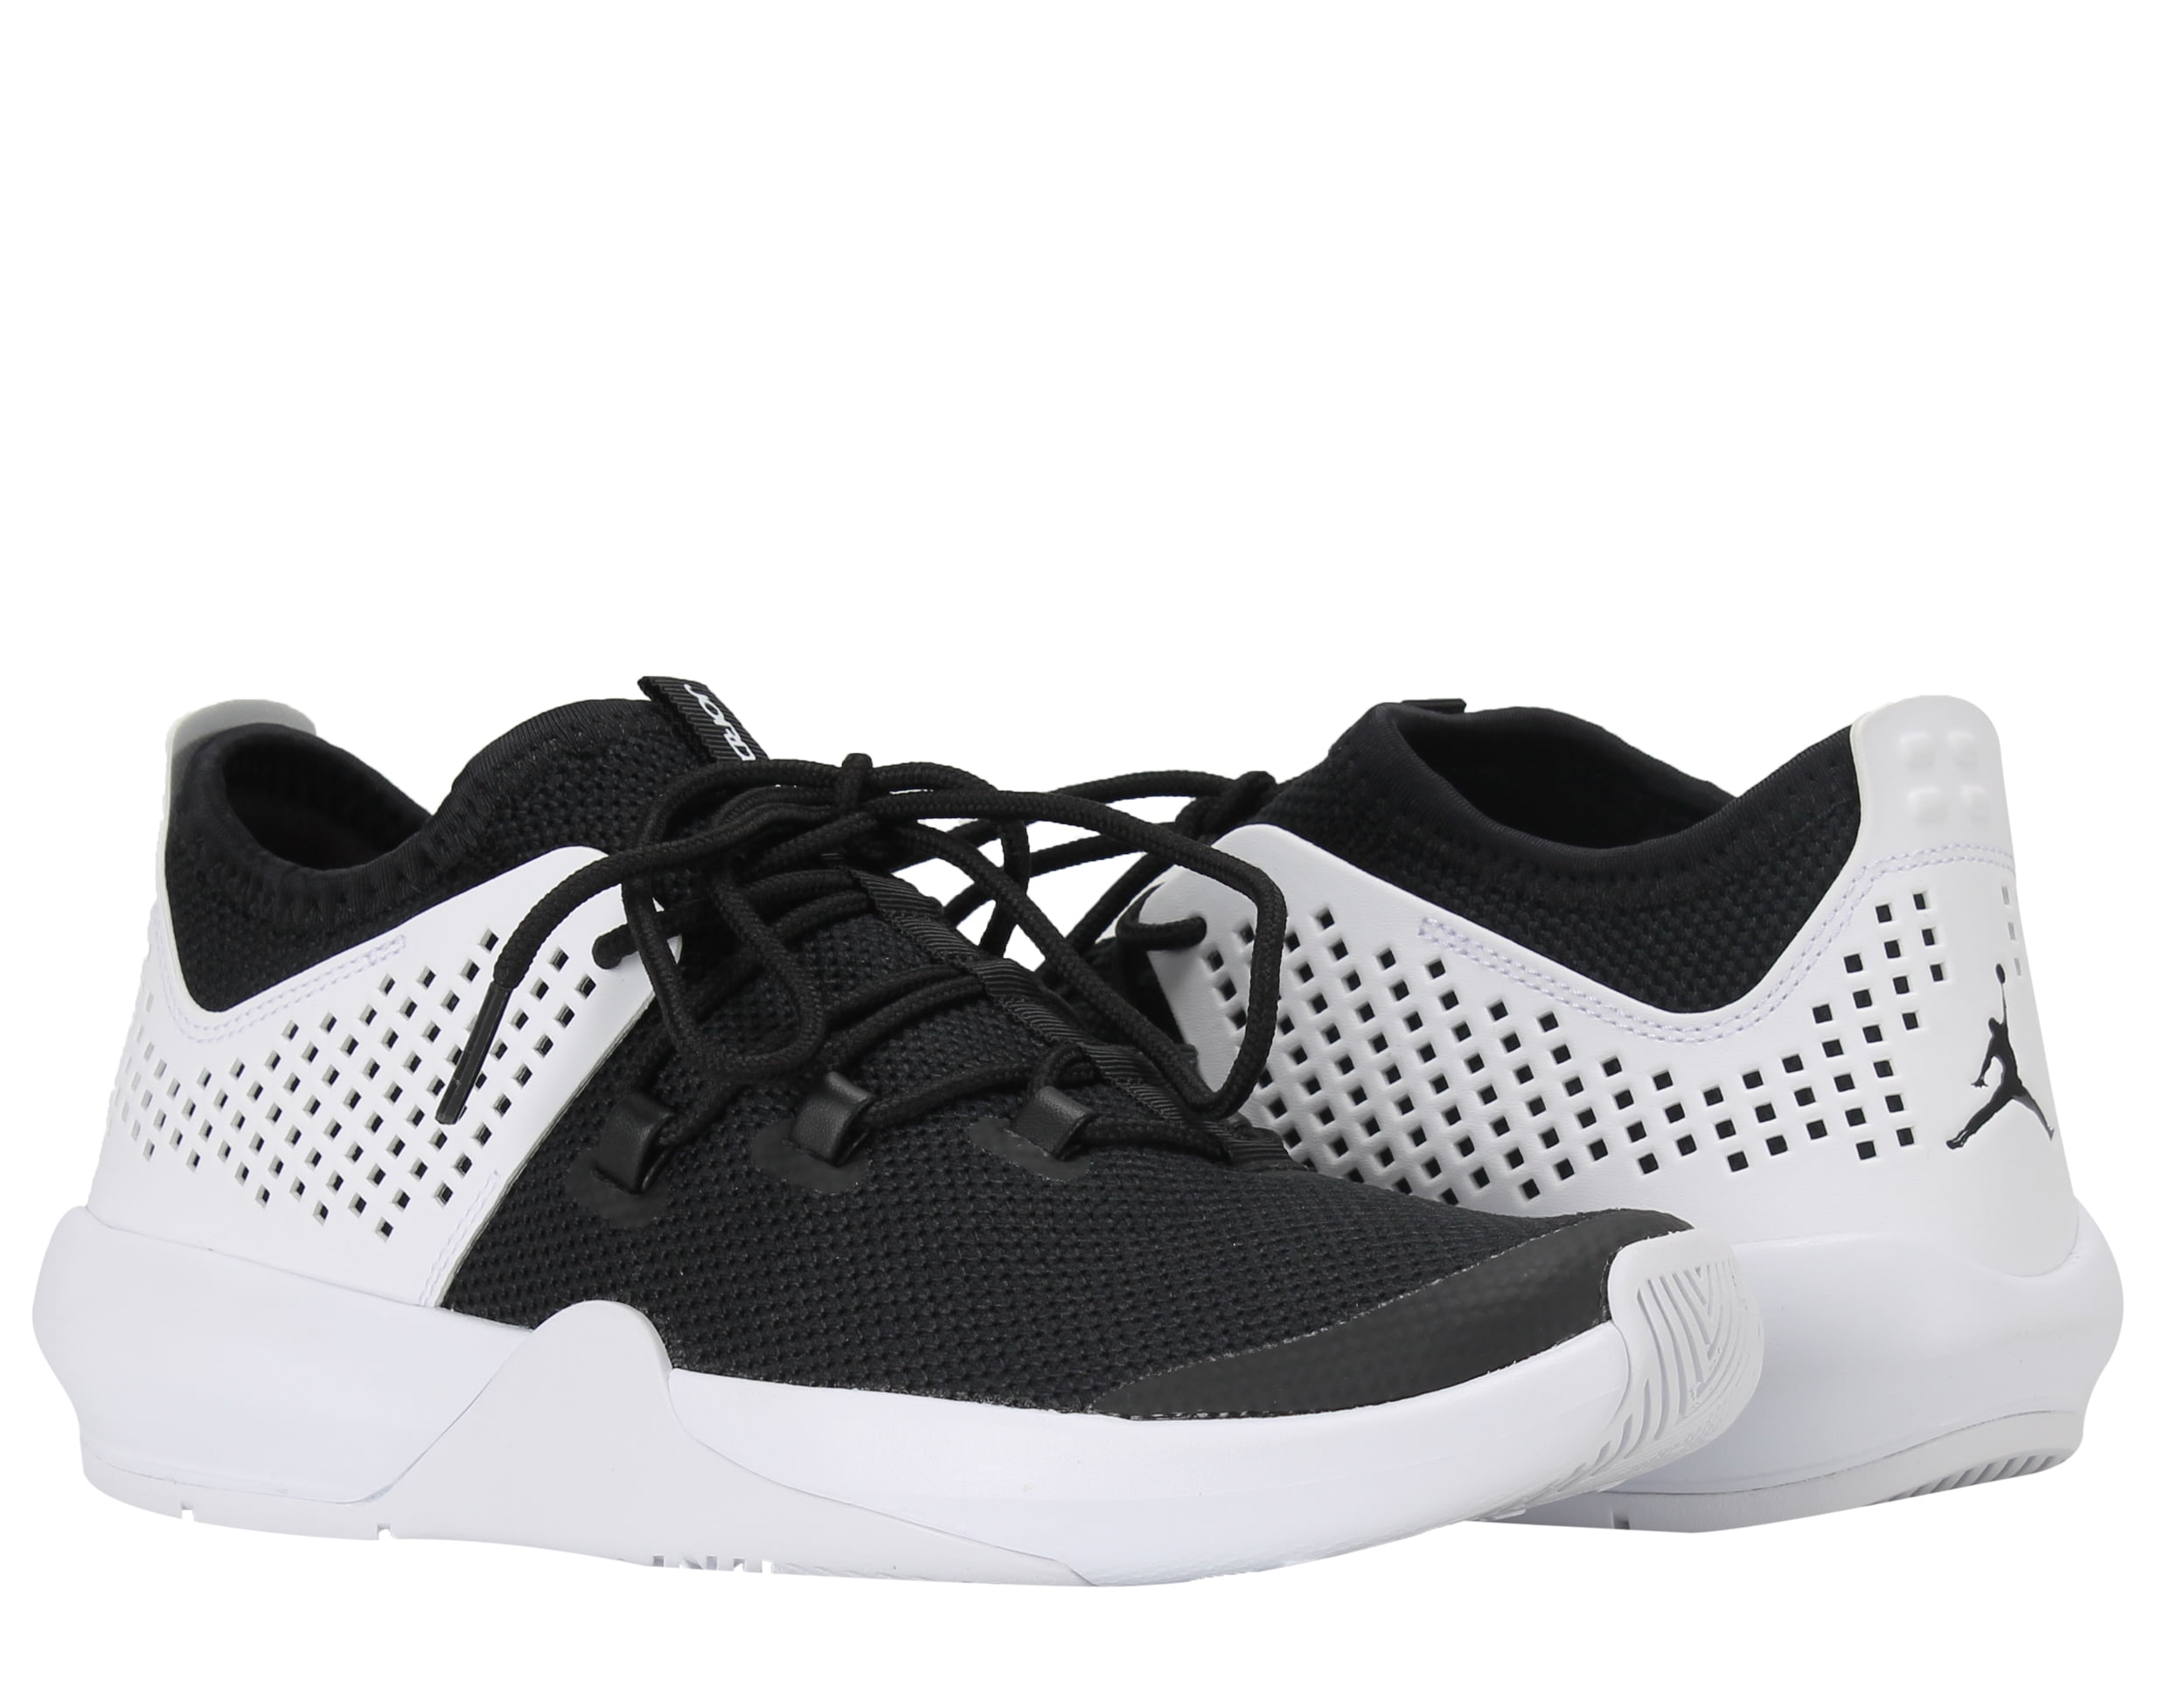 Air Jordan - Nike Air Jordan Express Men's Cross Training Shoes Size 11.5 -  Walmart.com - Walmart.com